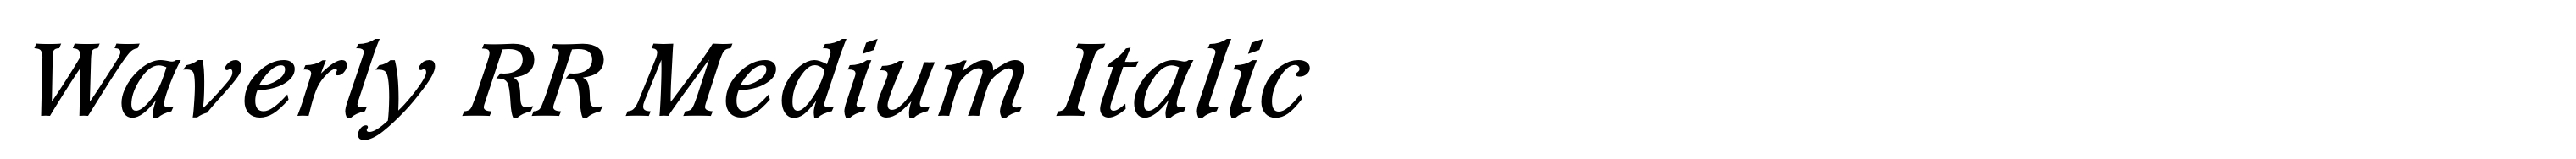 Waverly RR Medium Italic